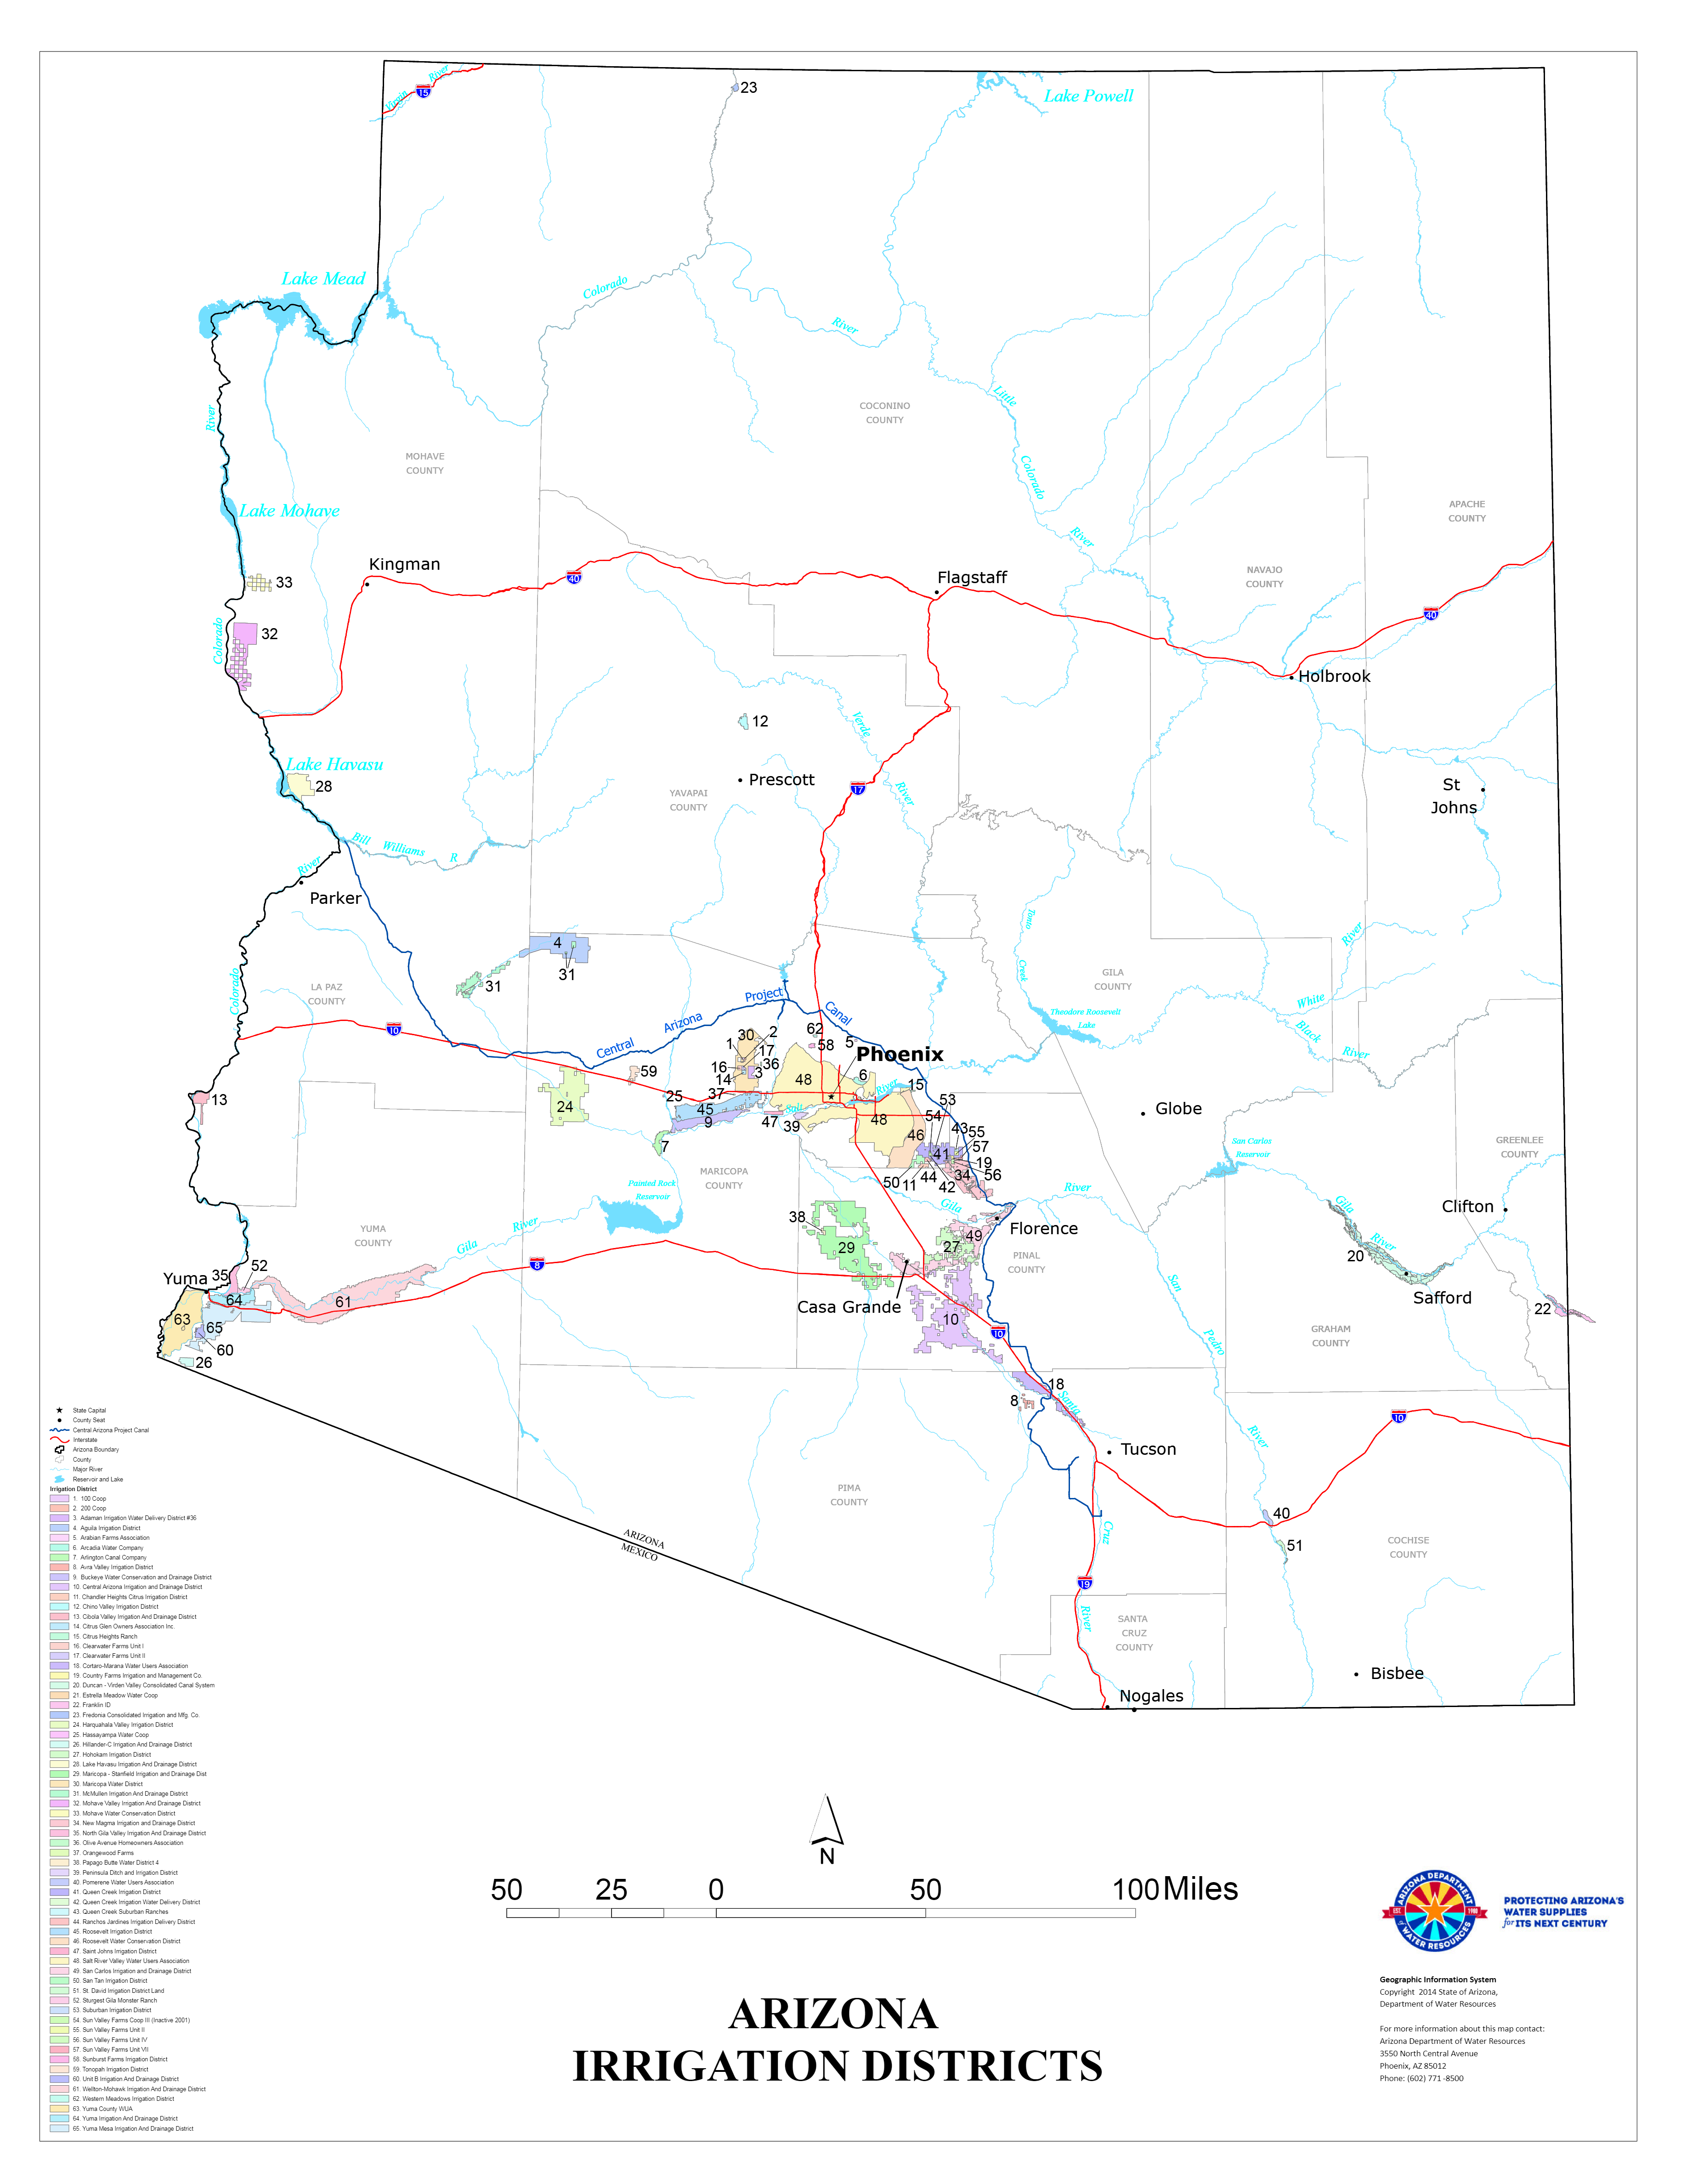 Arizona irrigation districts